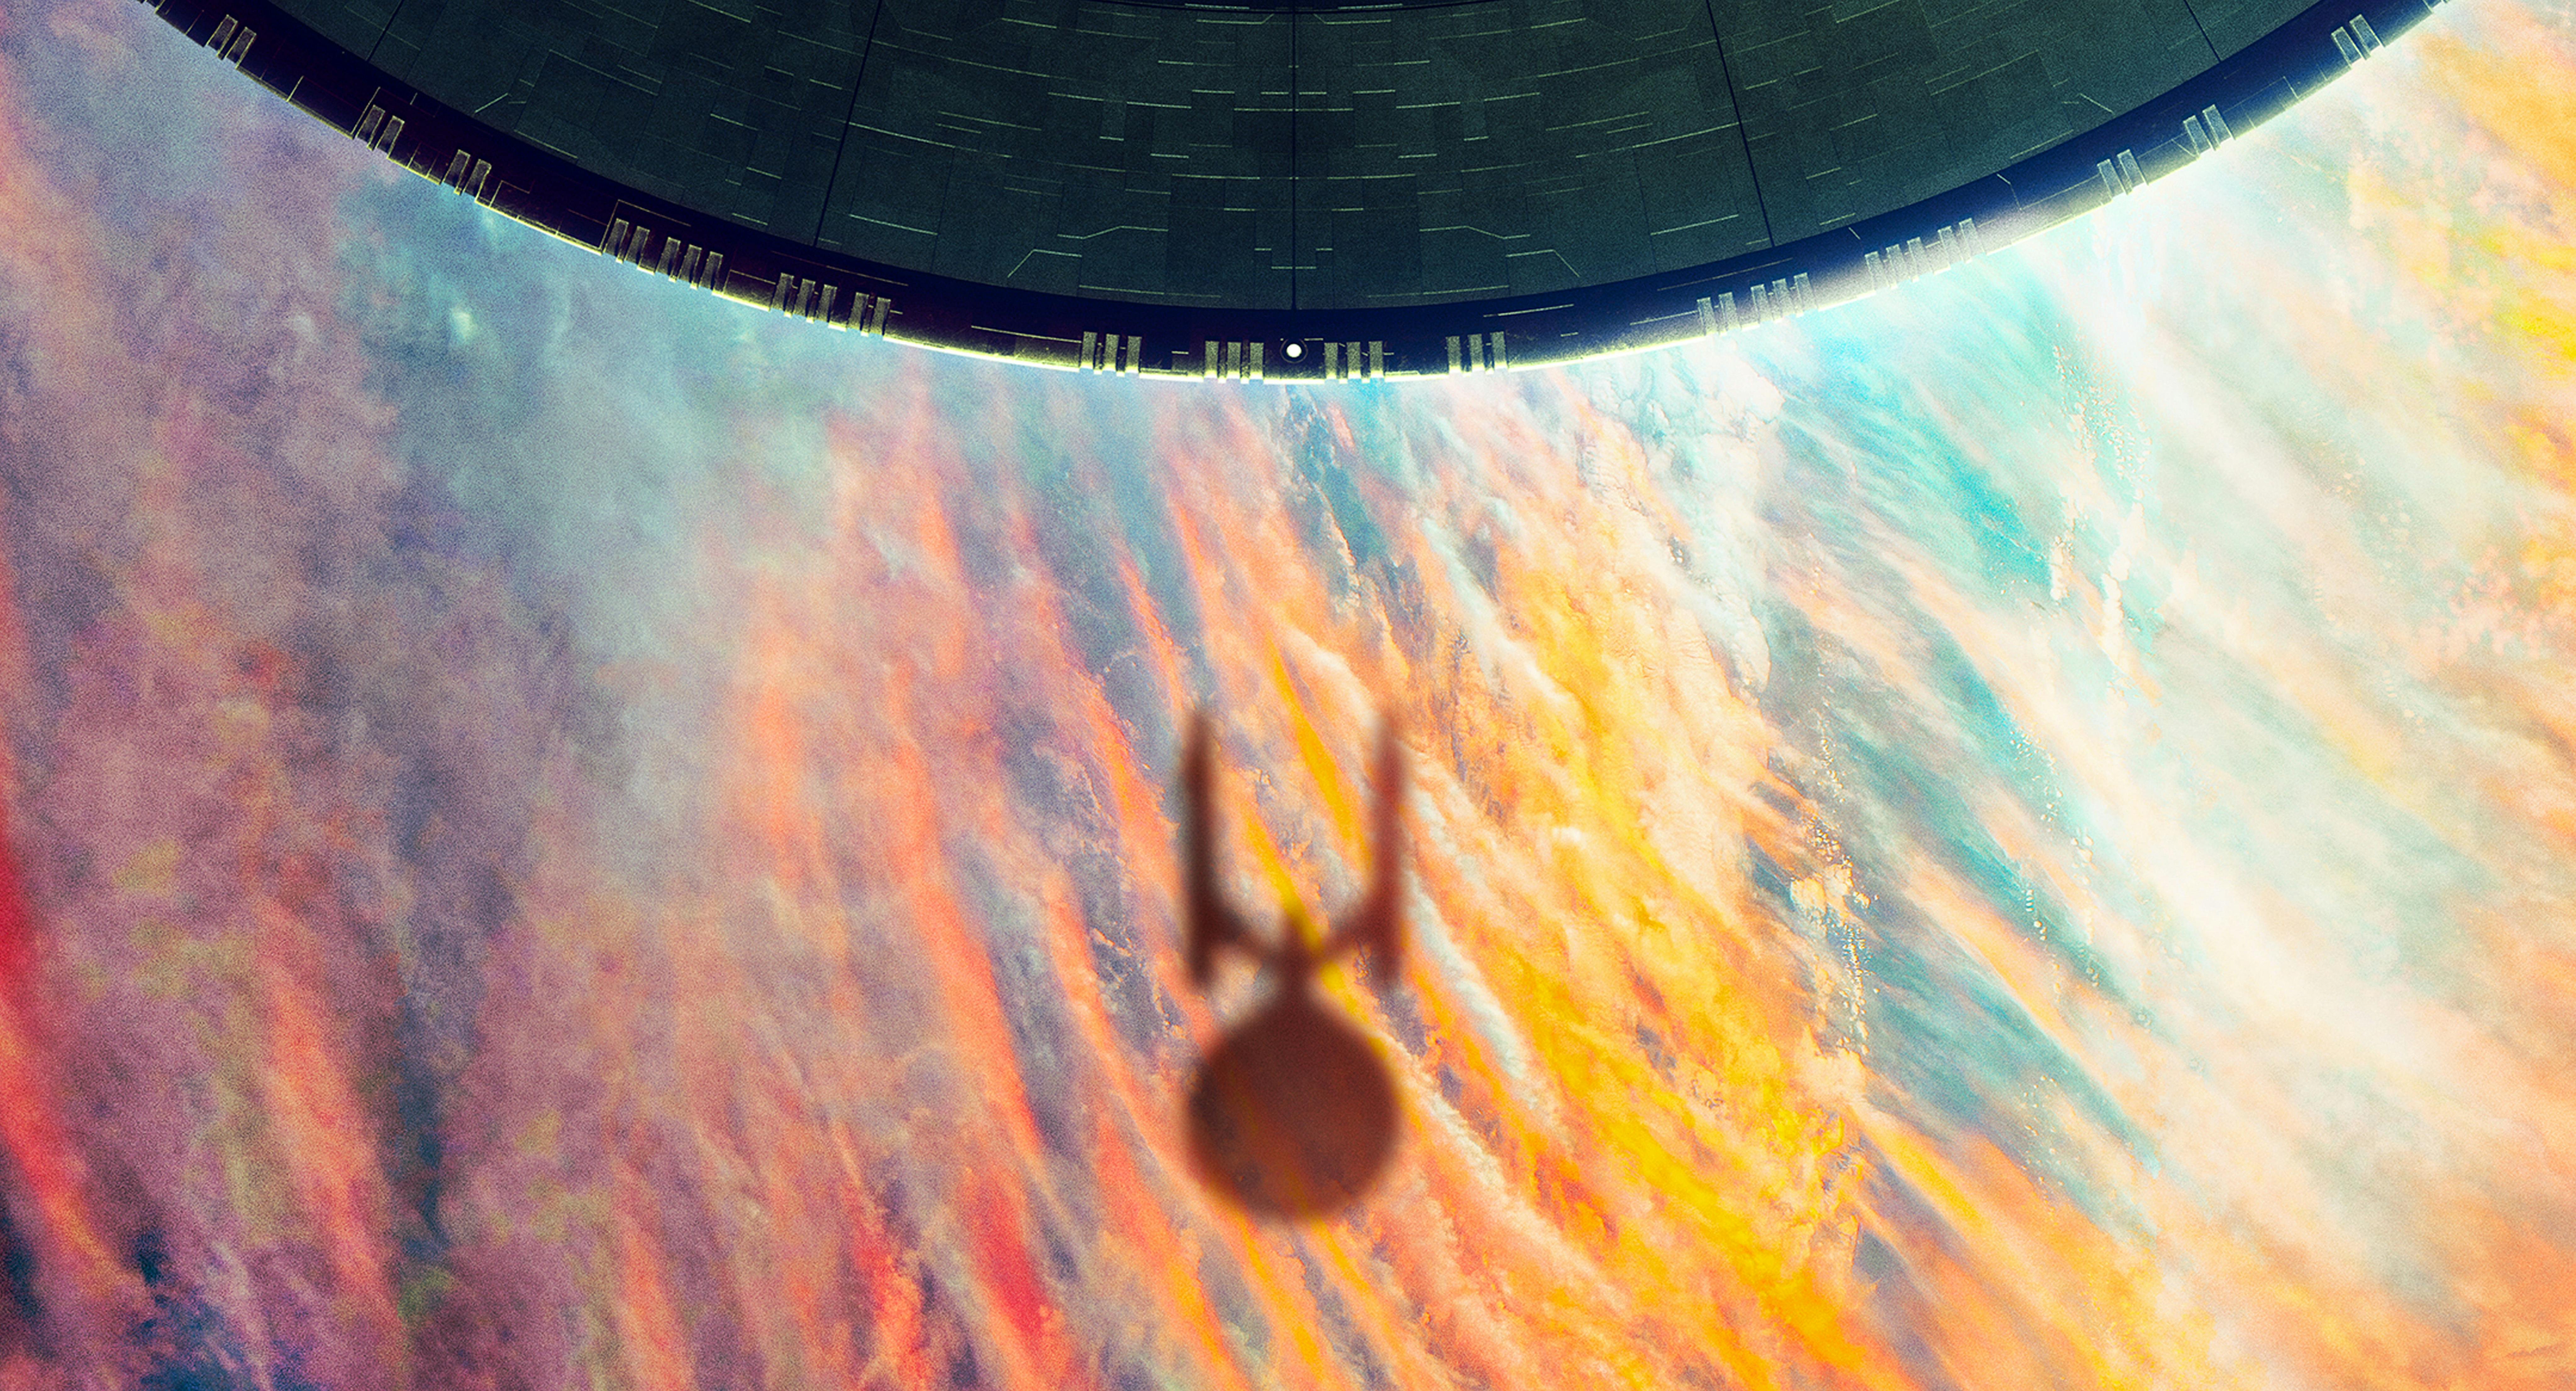 Crop of the Season 2 Star Trek: Strange New Worlds teaser poster featuring the U.S.S. Enterprise shadow